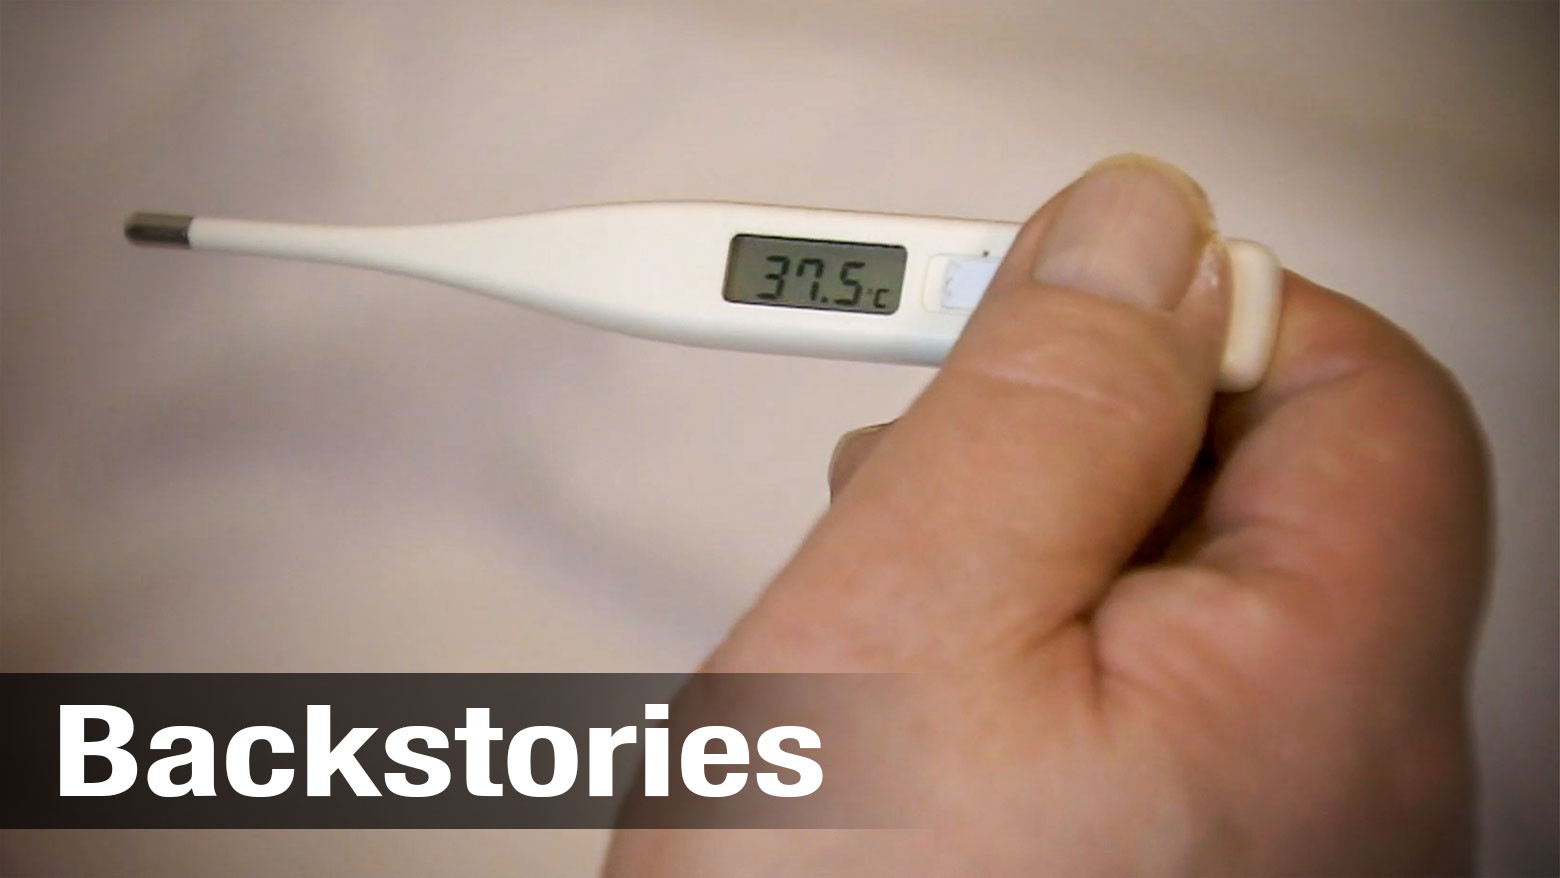 Body temperature standard proves problematic as a coronavirus indicator